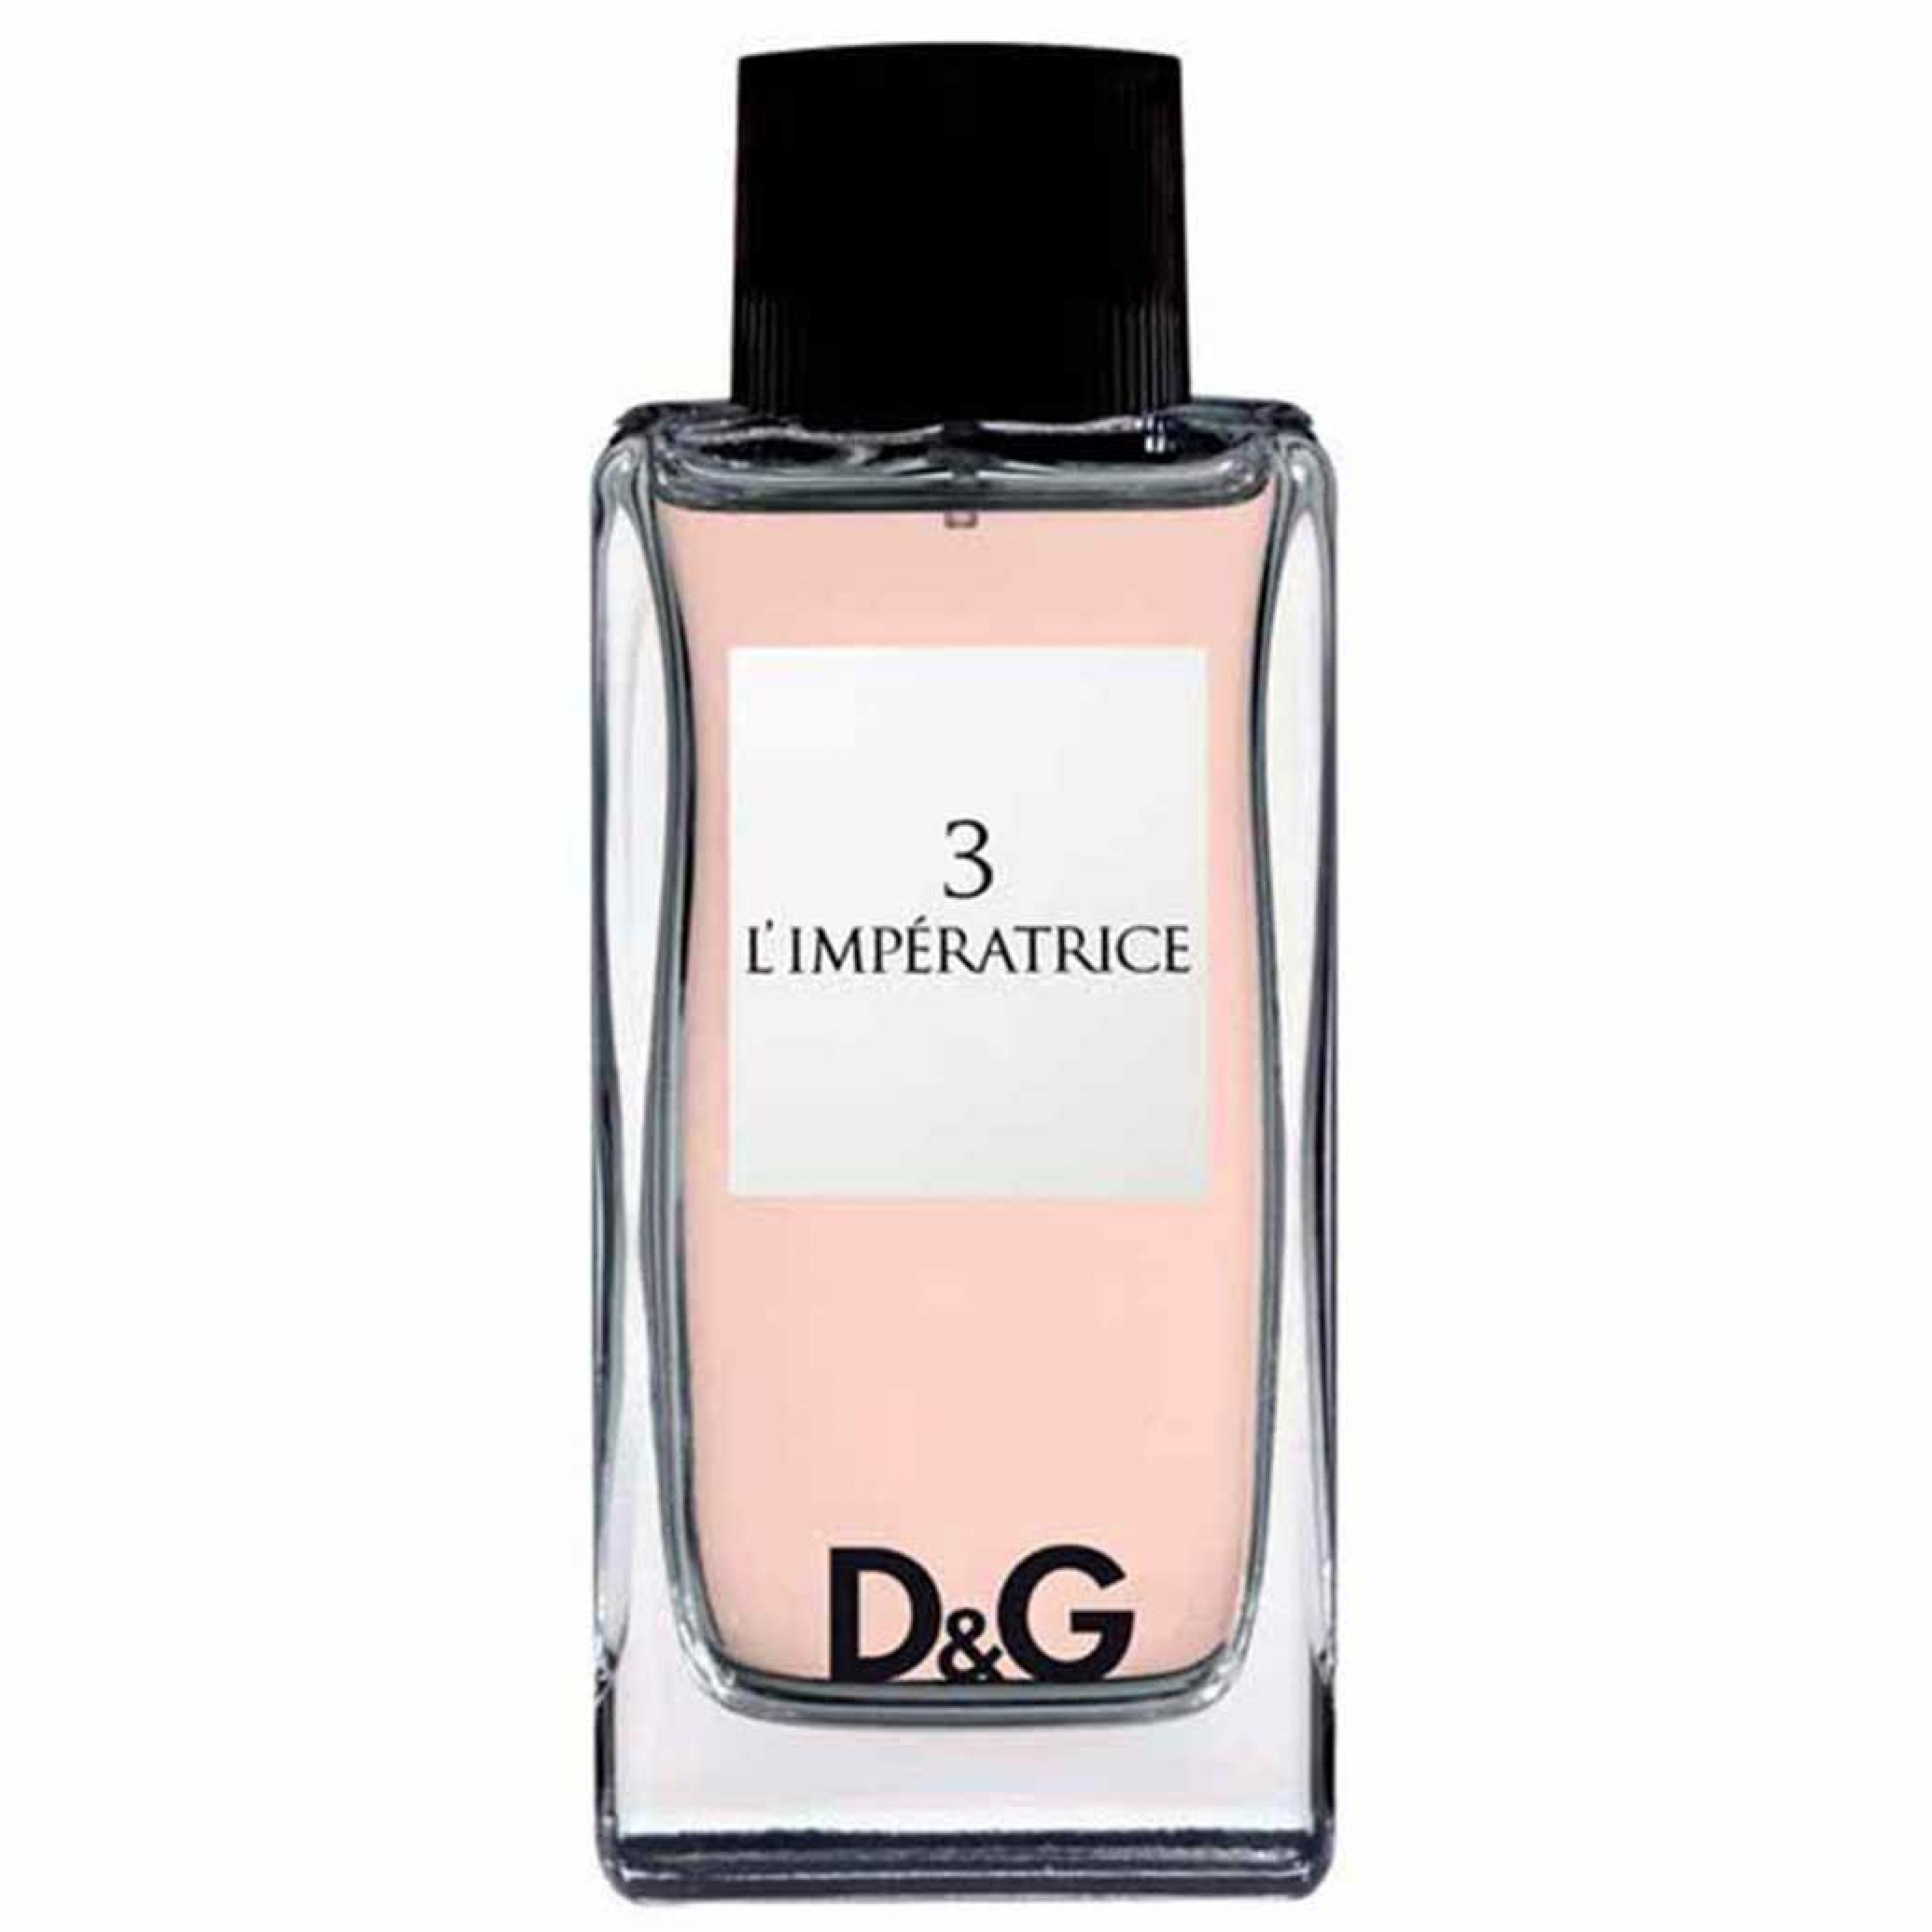 Dolce & Gabbana 3 L’Imperatrice is Heaven in a Bottle